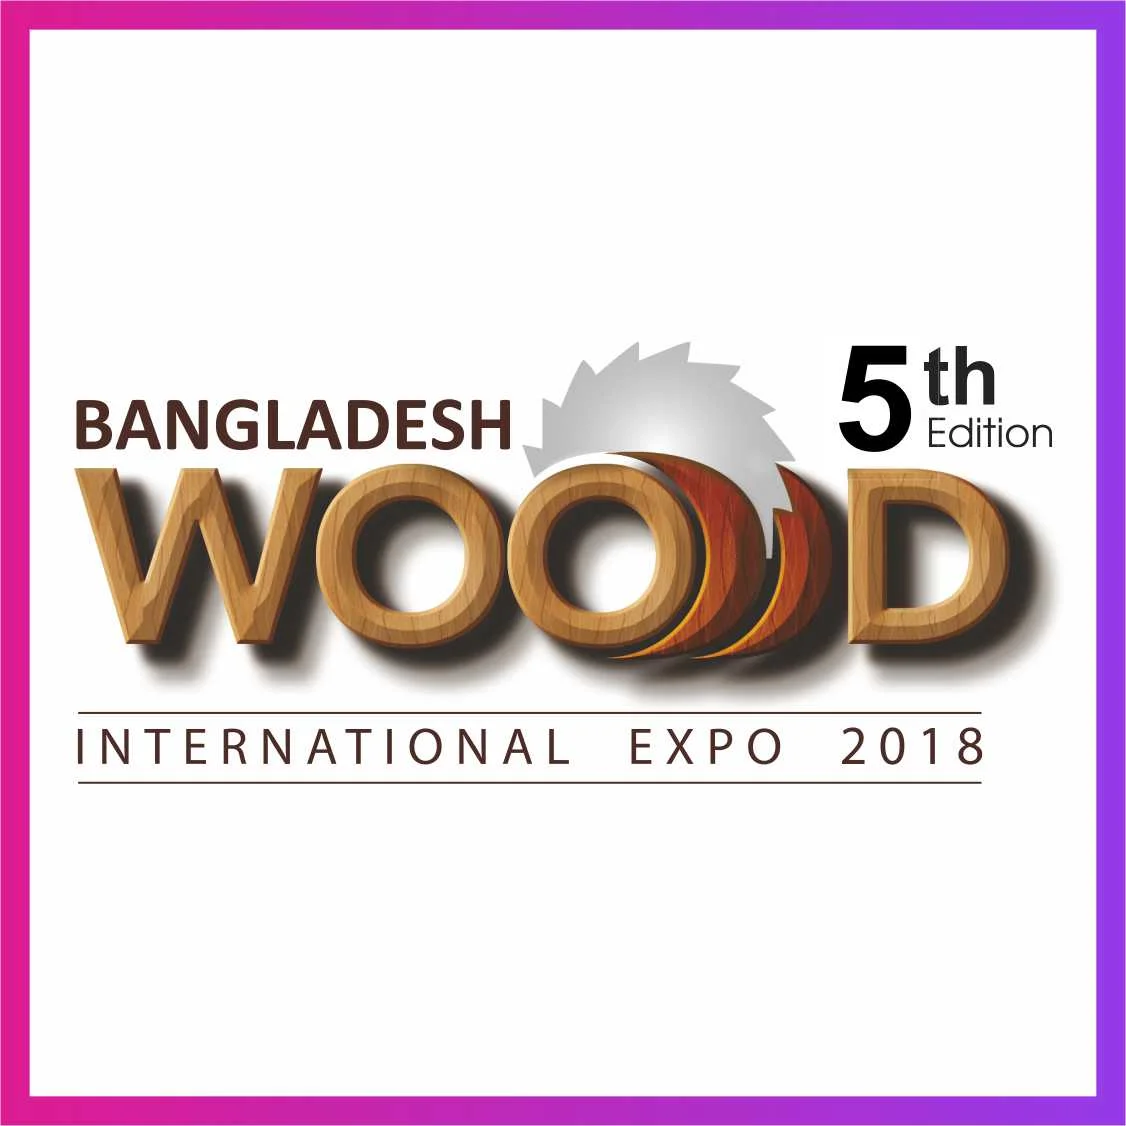 Bangladesh Wood International Expo 2019